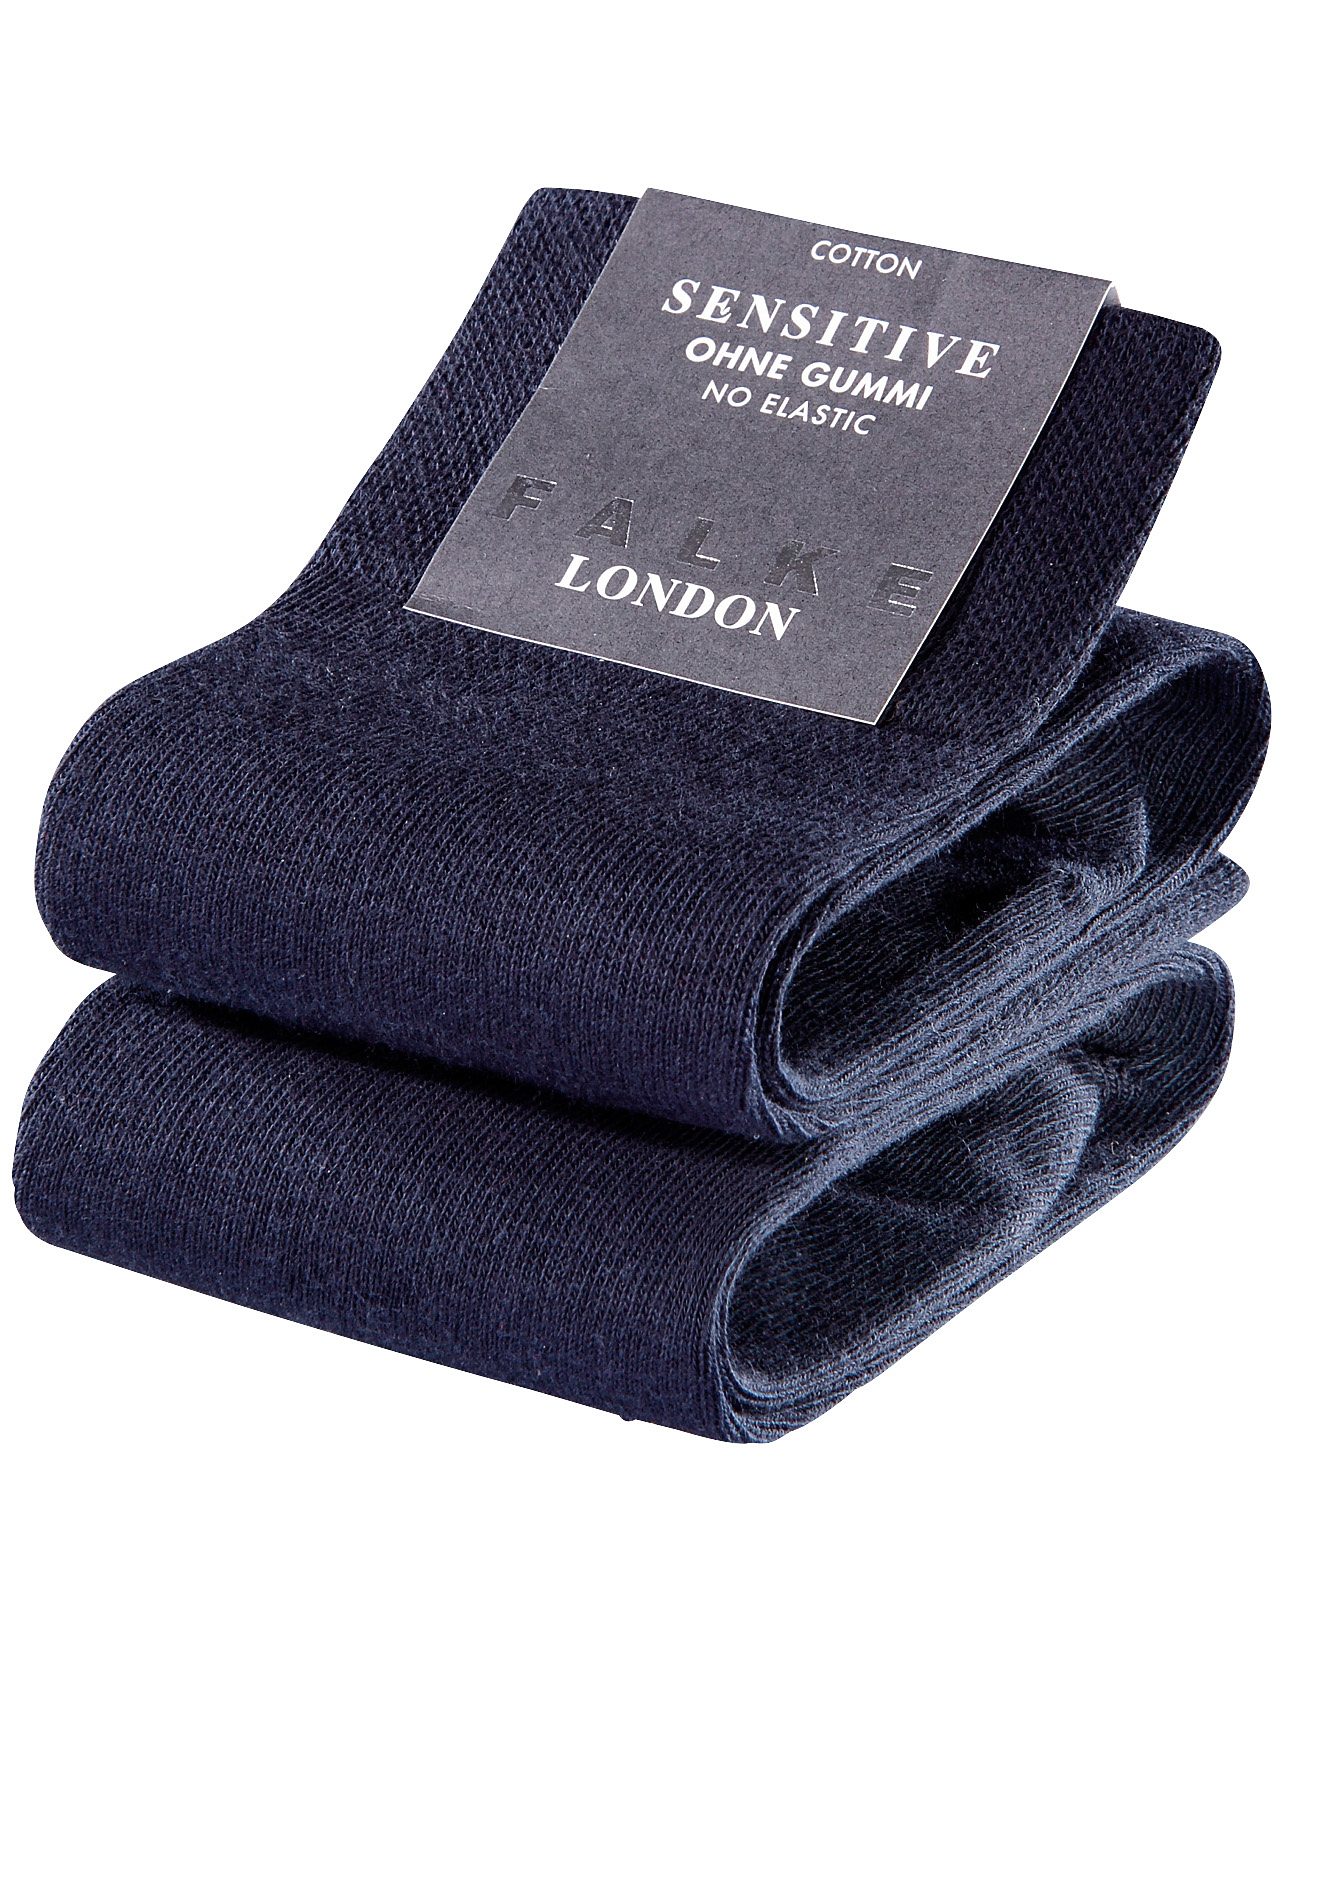 FALKE Socken »Sensitive London«, (2 Paar), mit sensitve Bündchen ohne Gummi von Falke